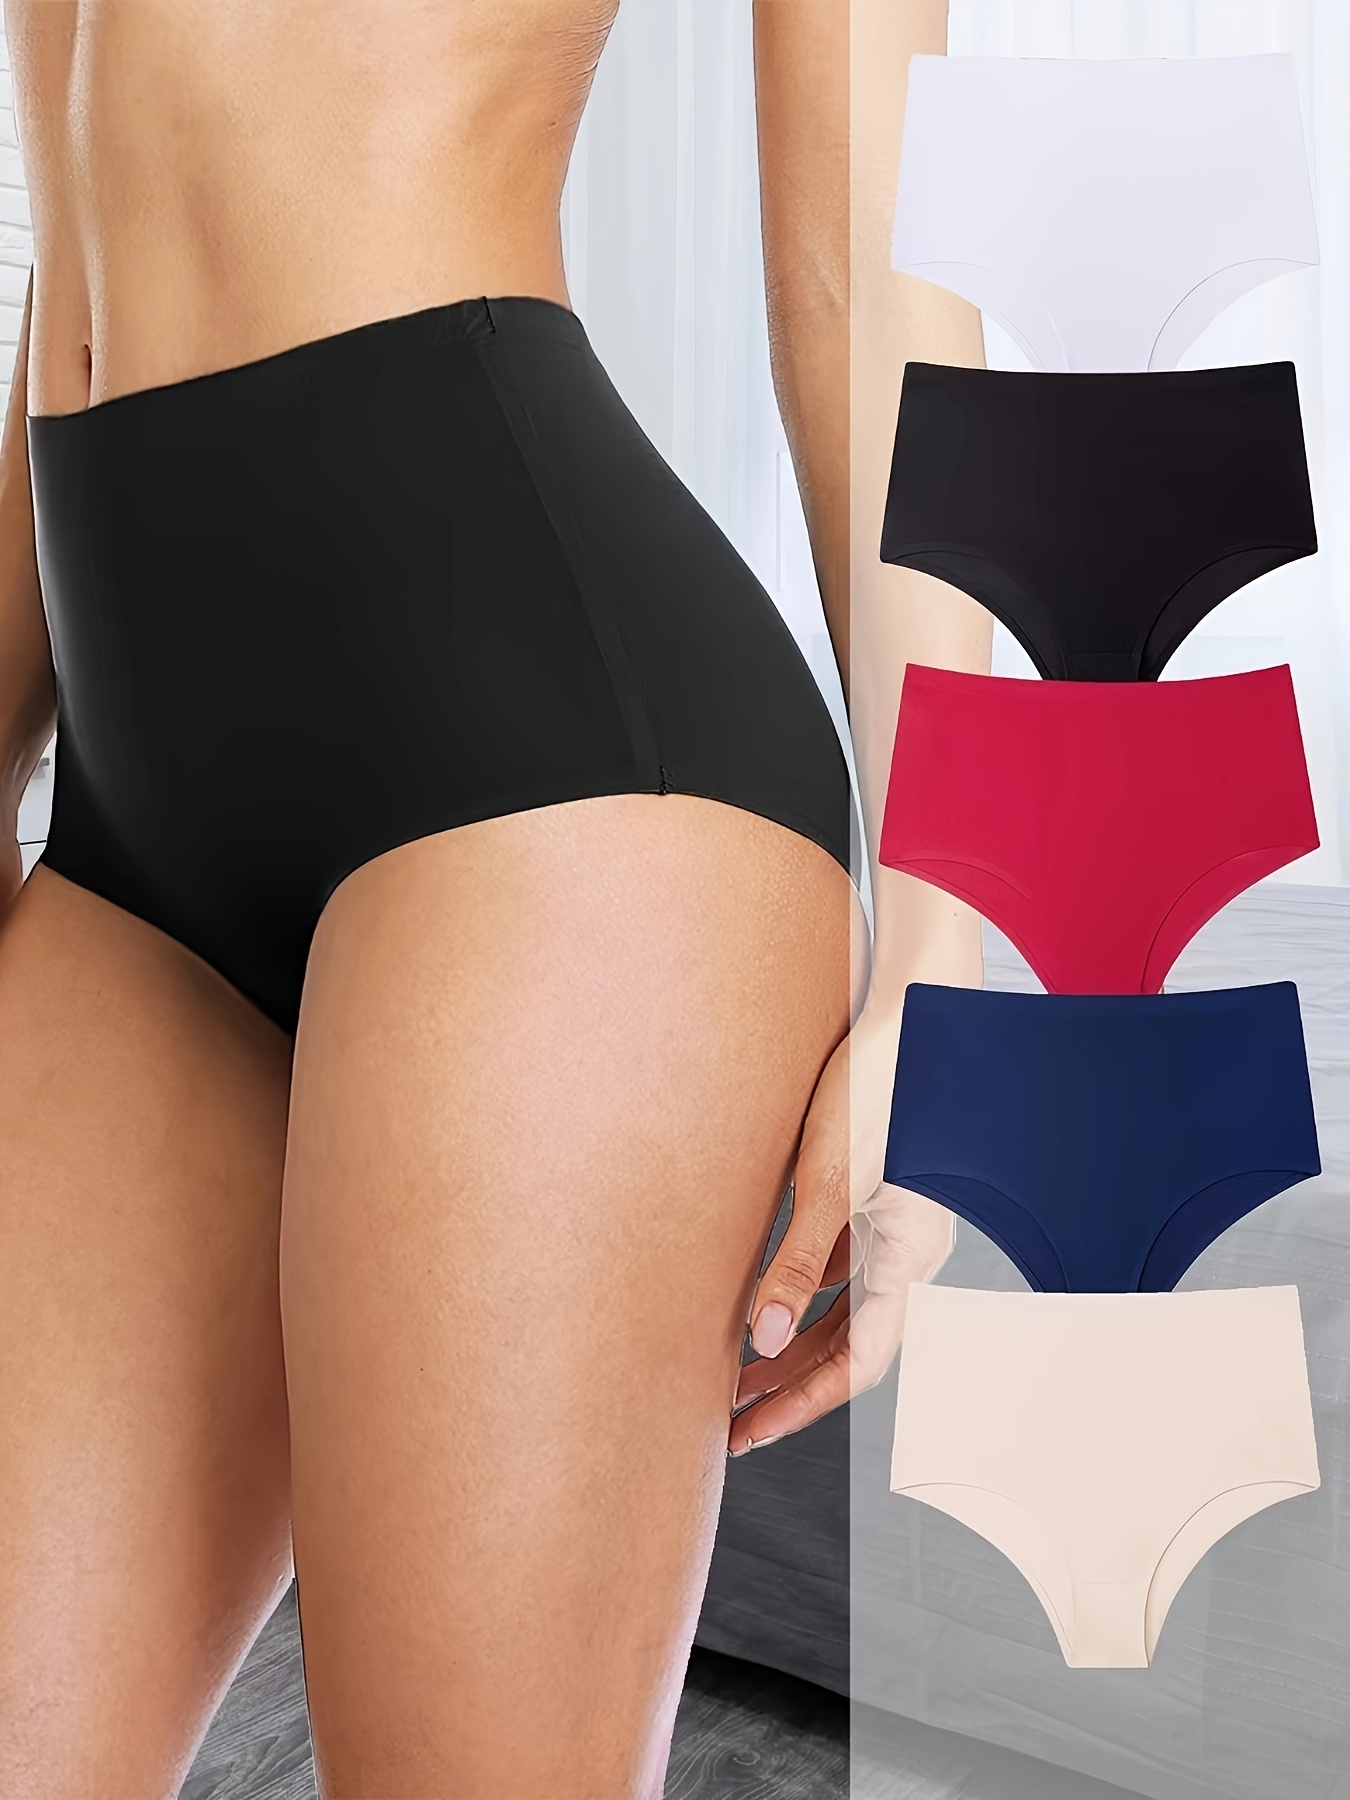 Seamless Panty 5Pcs/Set Mid Rise Panties Sexy Underwear for Women